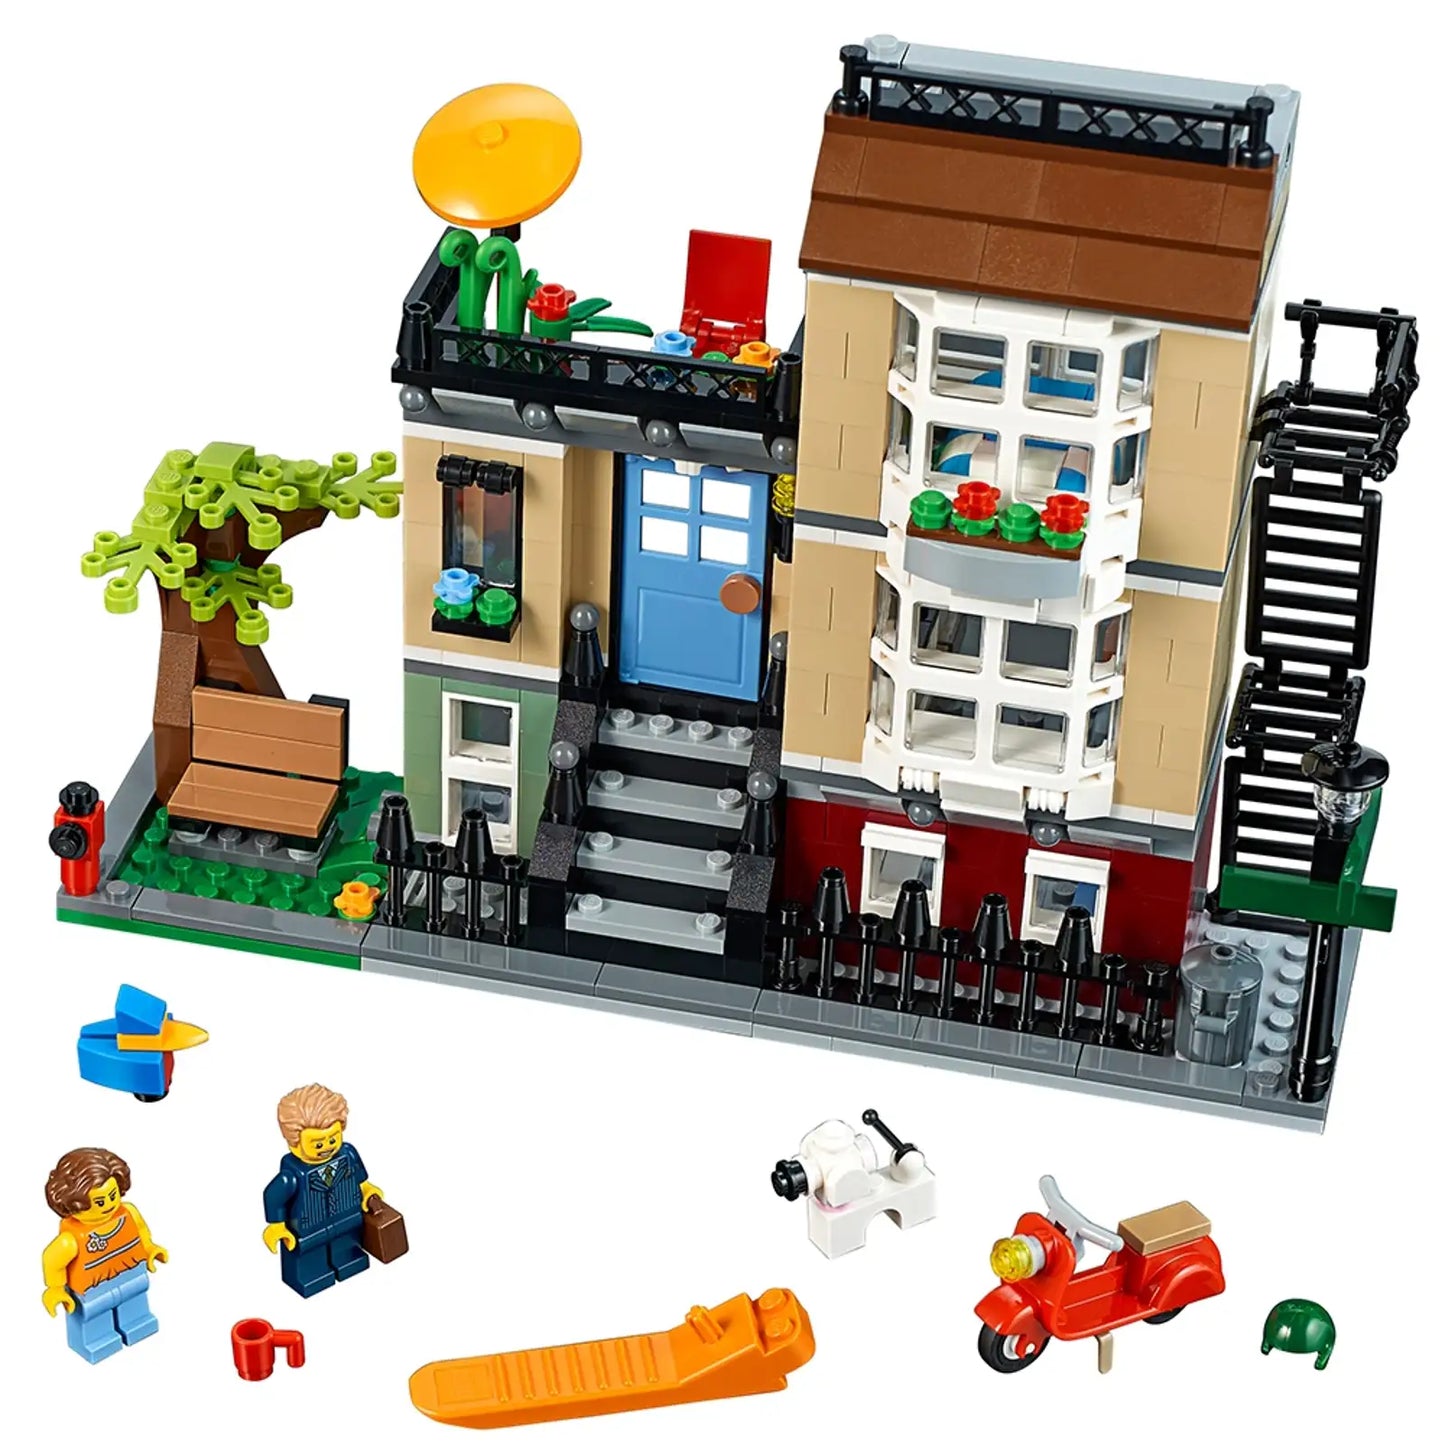 Creator Stadthaus LEGO 31065